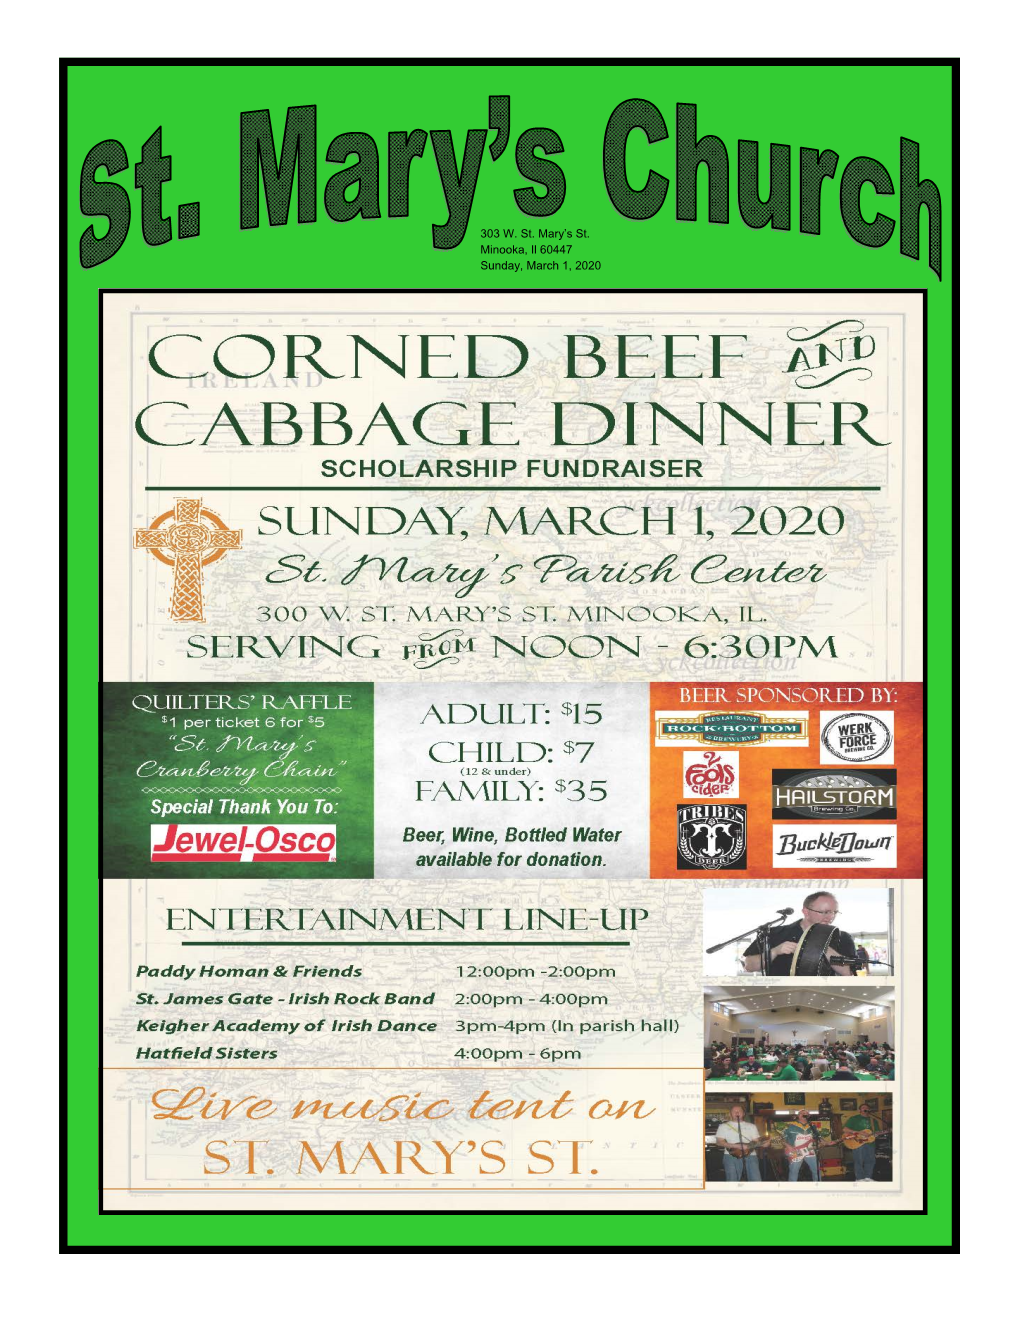 303 W. St. Mary's St. Minooka, Il 60447 Sunday, March 1, 2020